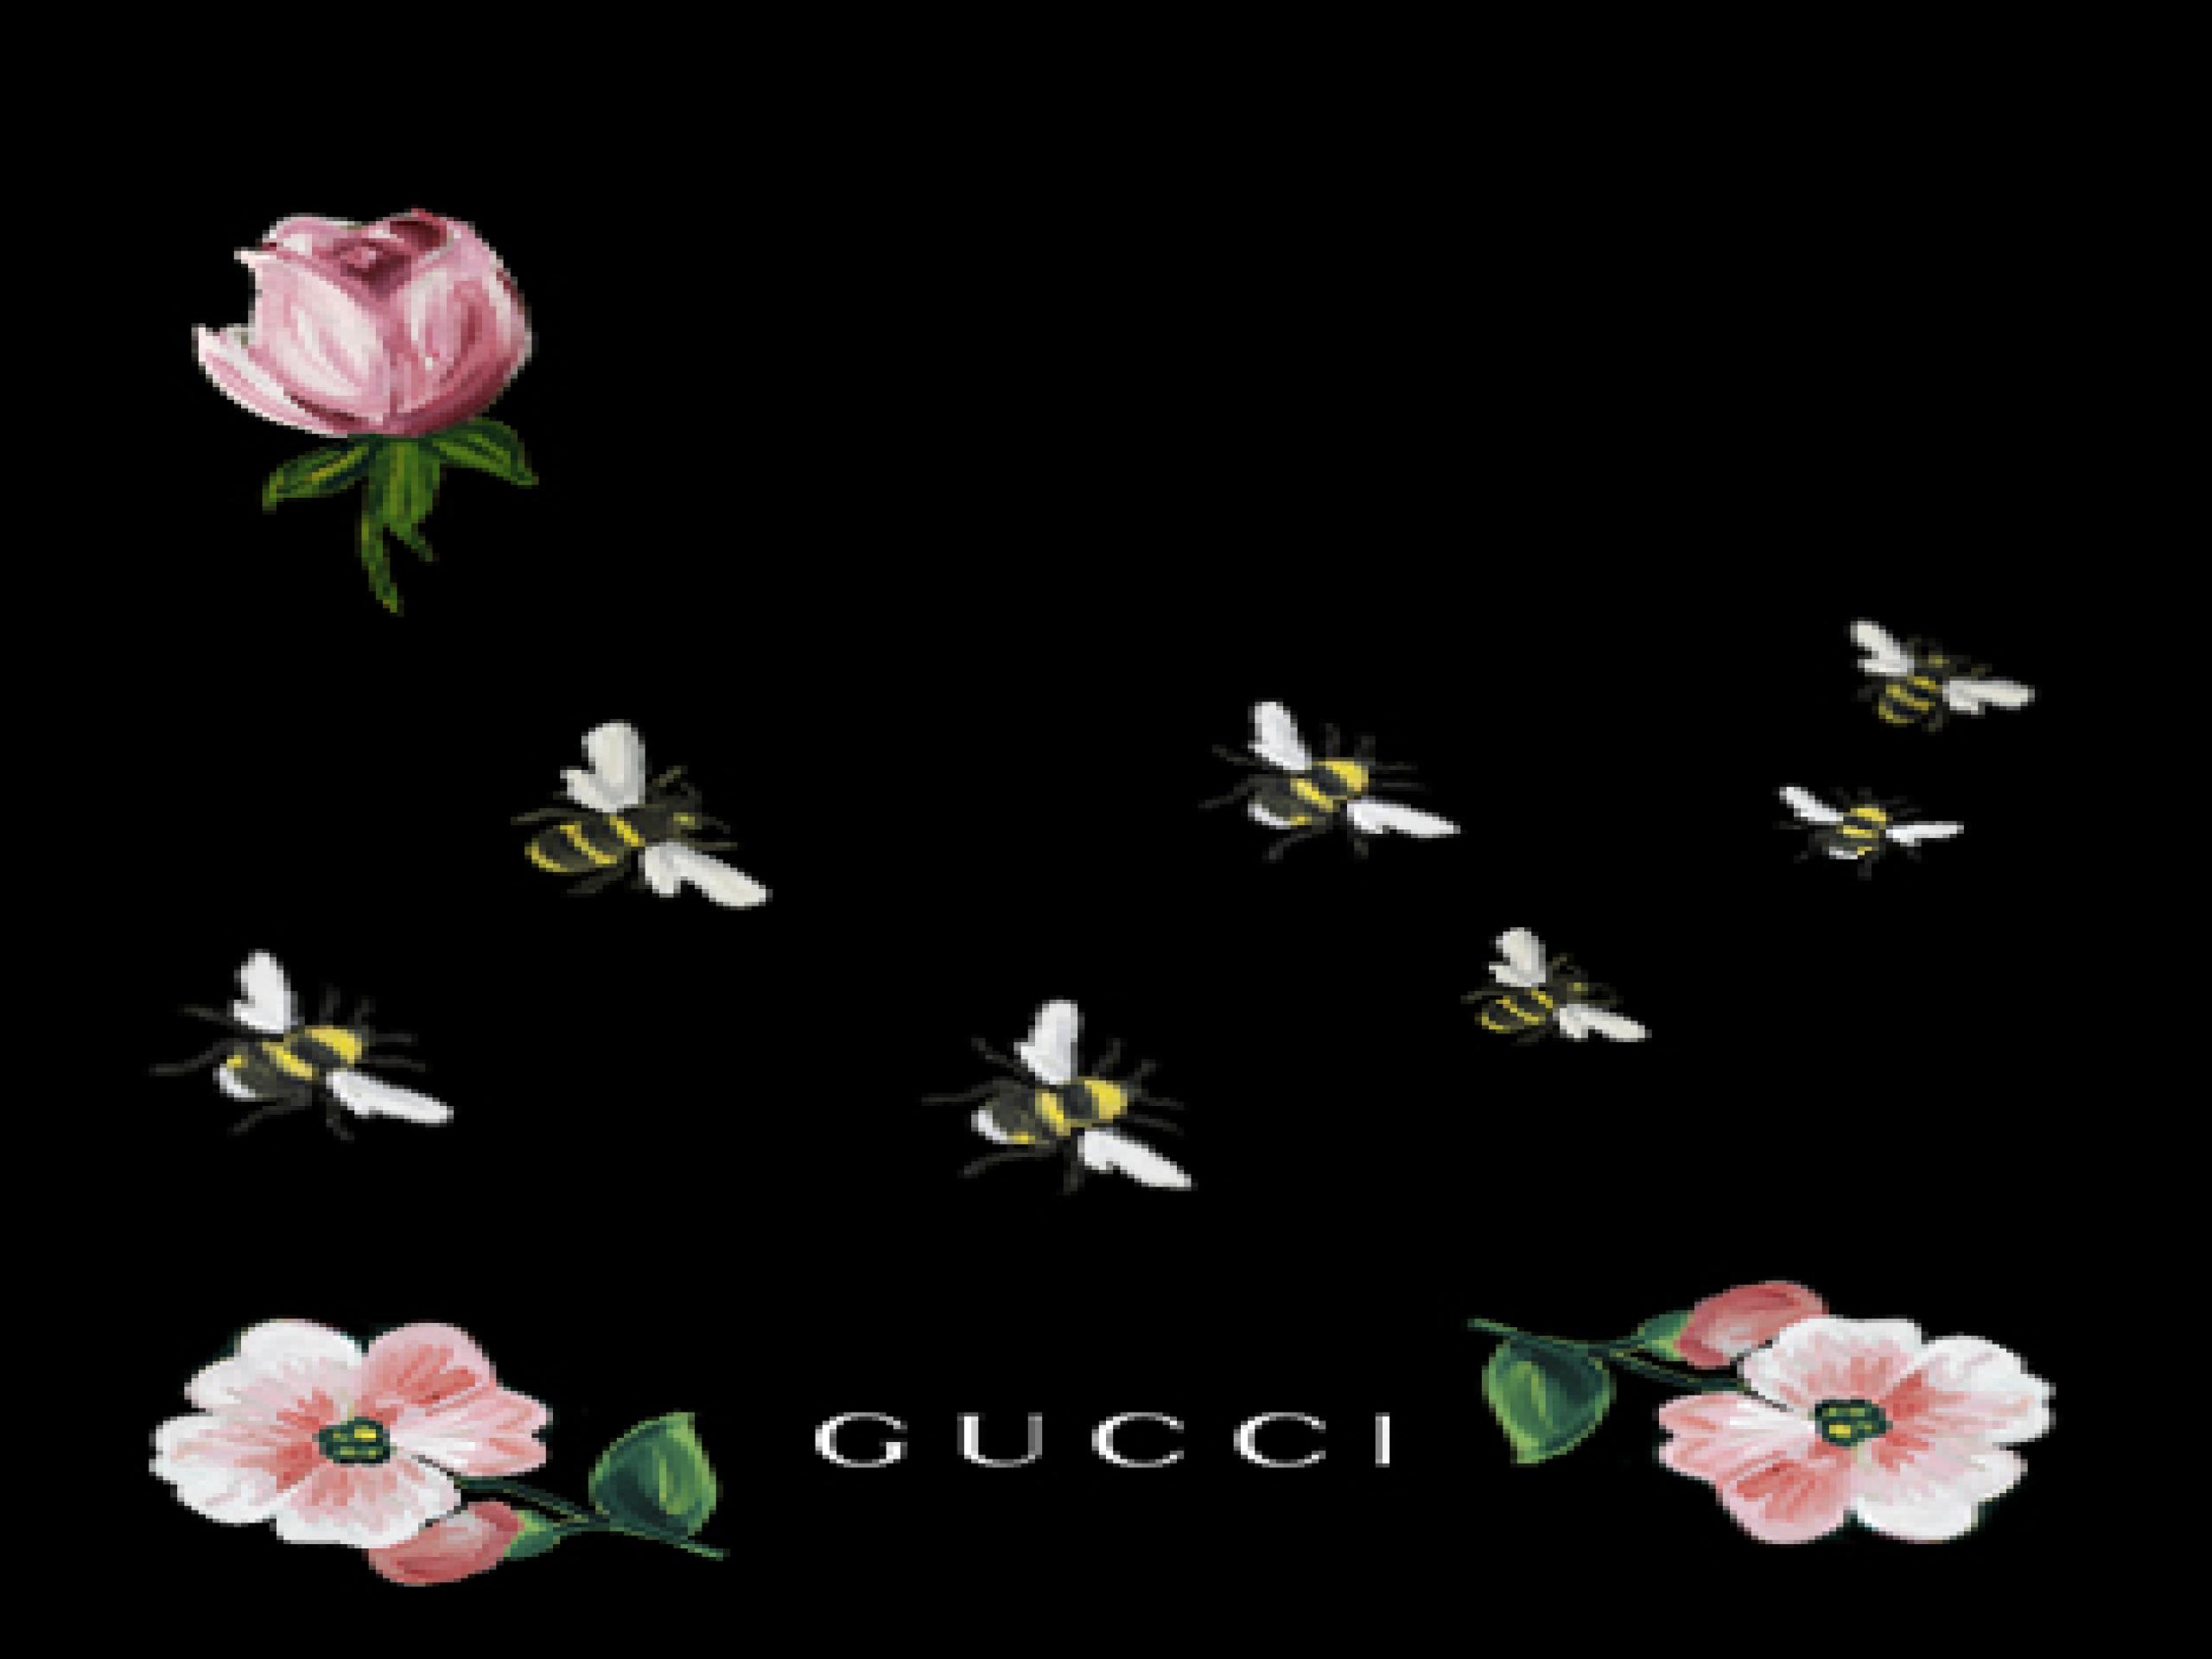 Gucci Wallpaper Hd - HD Wallpaper 